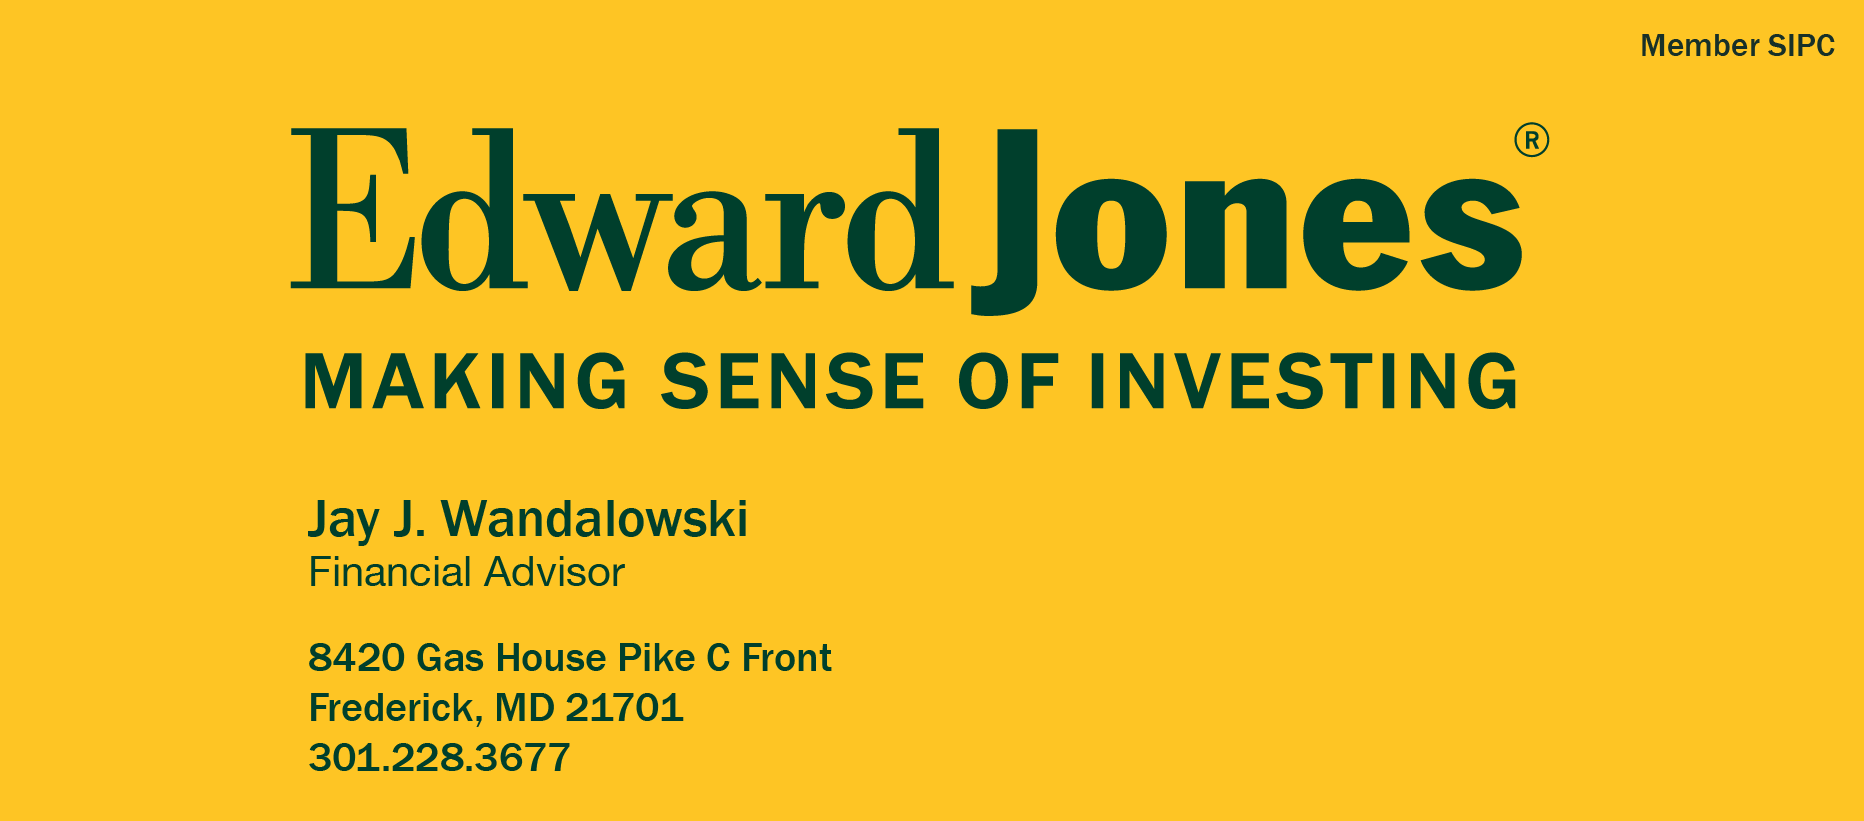 Edward Jones - Jay Wandalowski